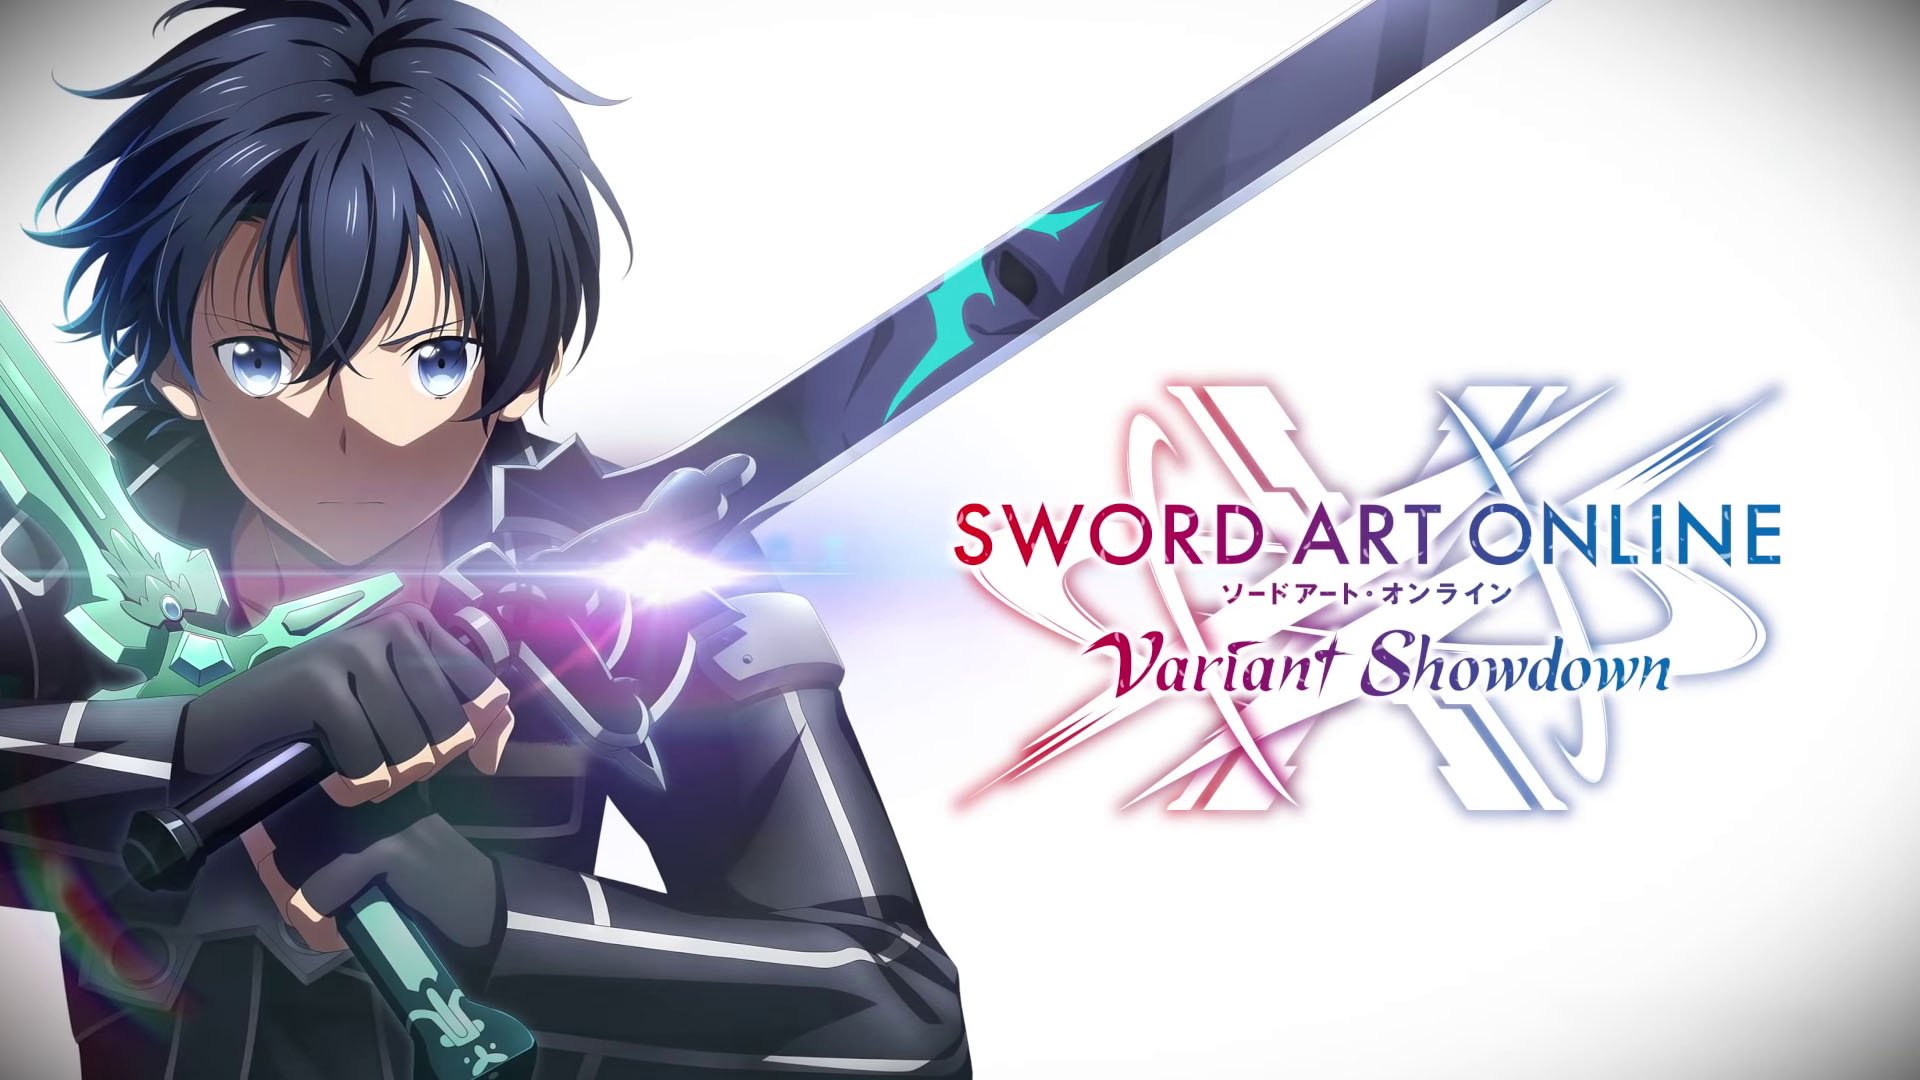 Sword Art Online Variant Showdown – Game is Now Live